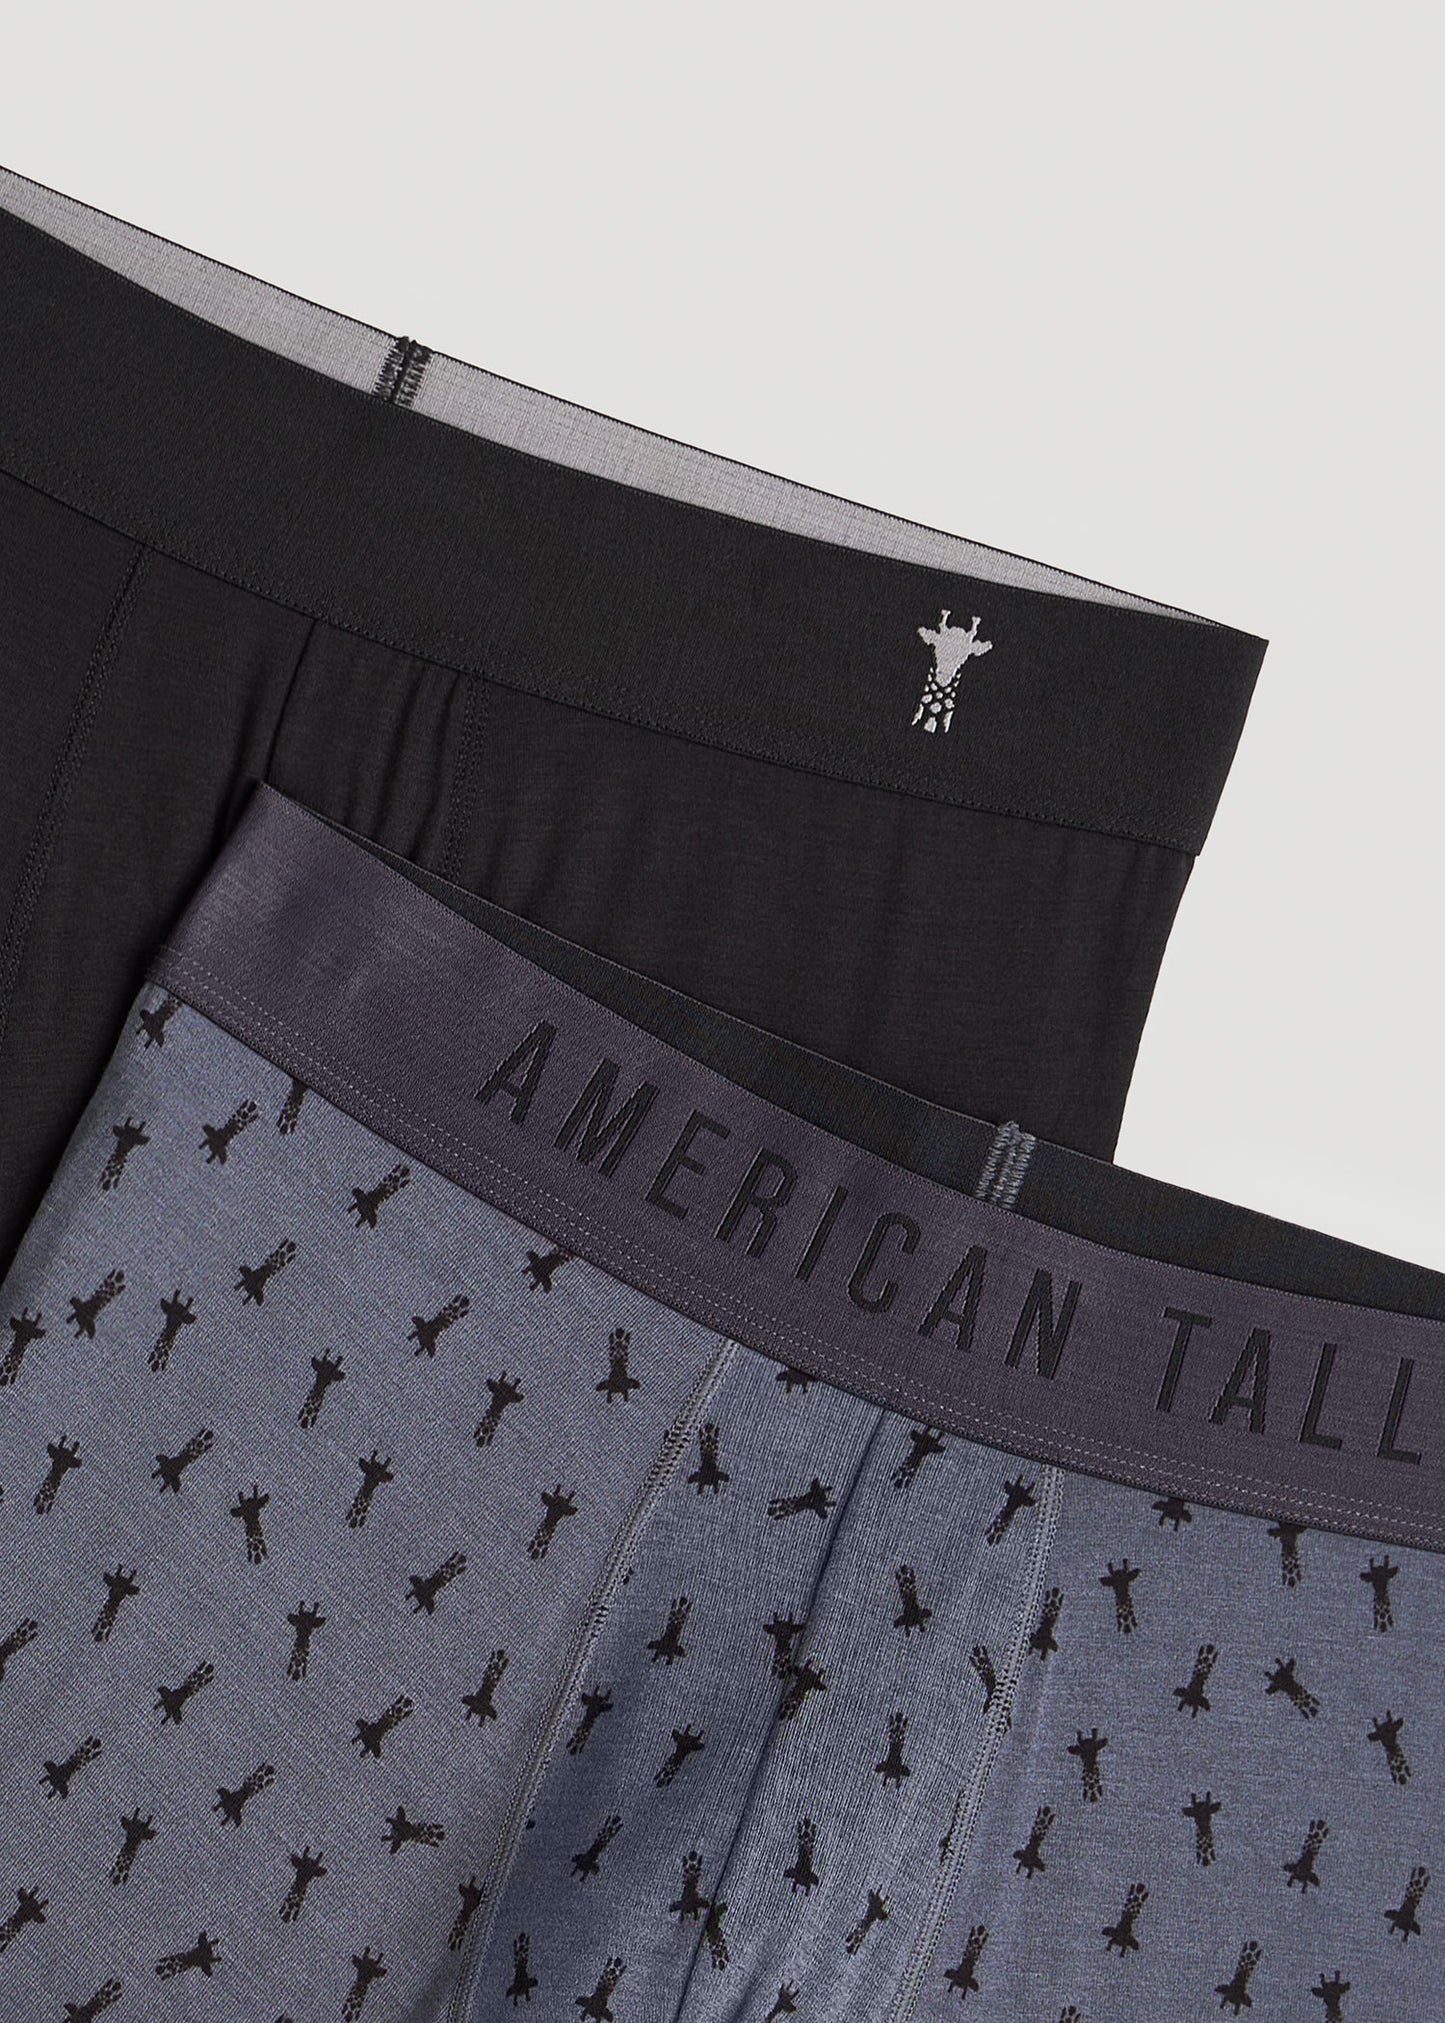       American-Tall-Micro-Modal-Extra-Long-Boxer-Briefs-in-Giraffe-Print-Black-2-Pack-M-Tall-Giraffe-Print-Black-Detail